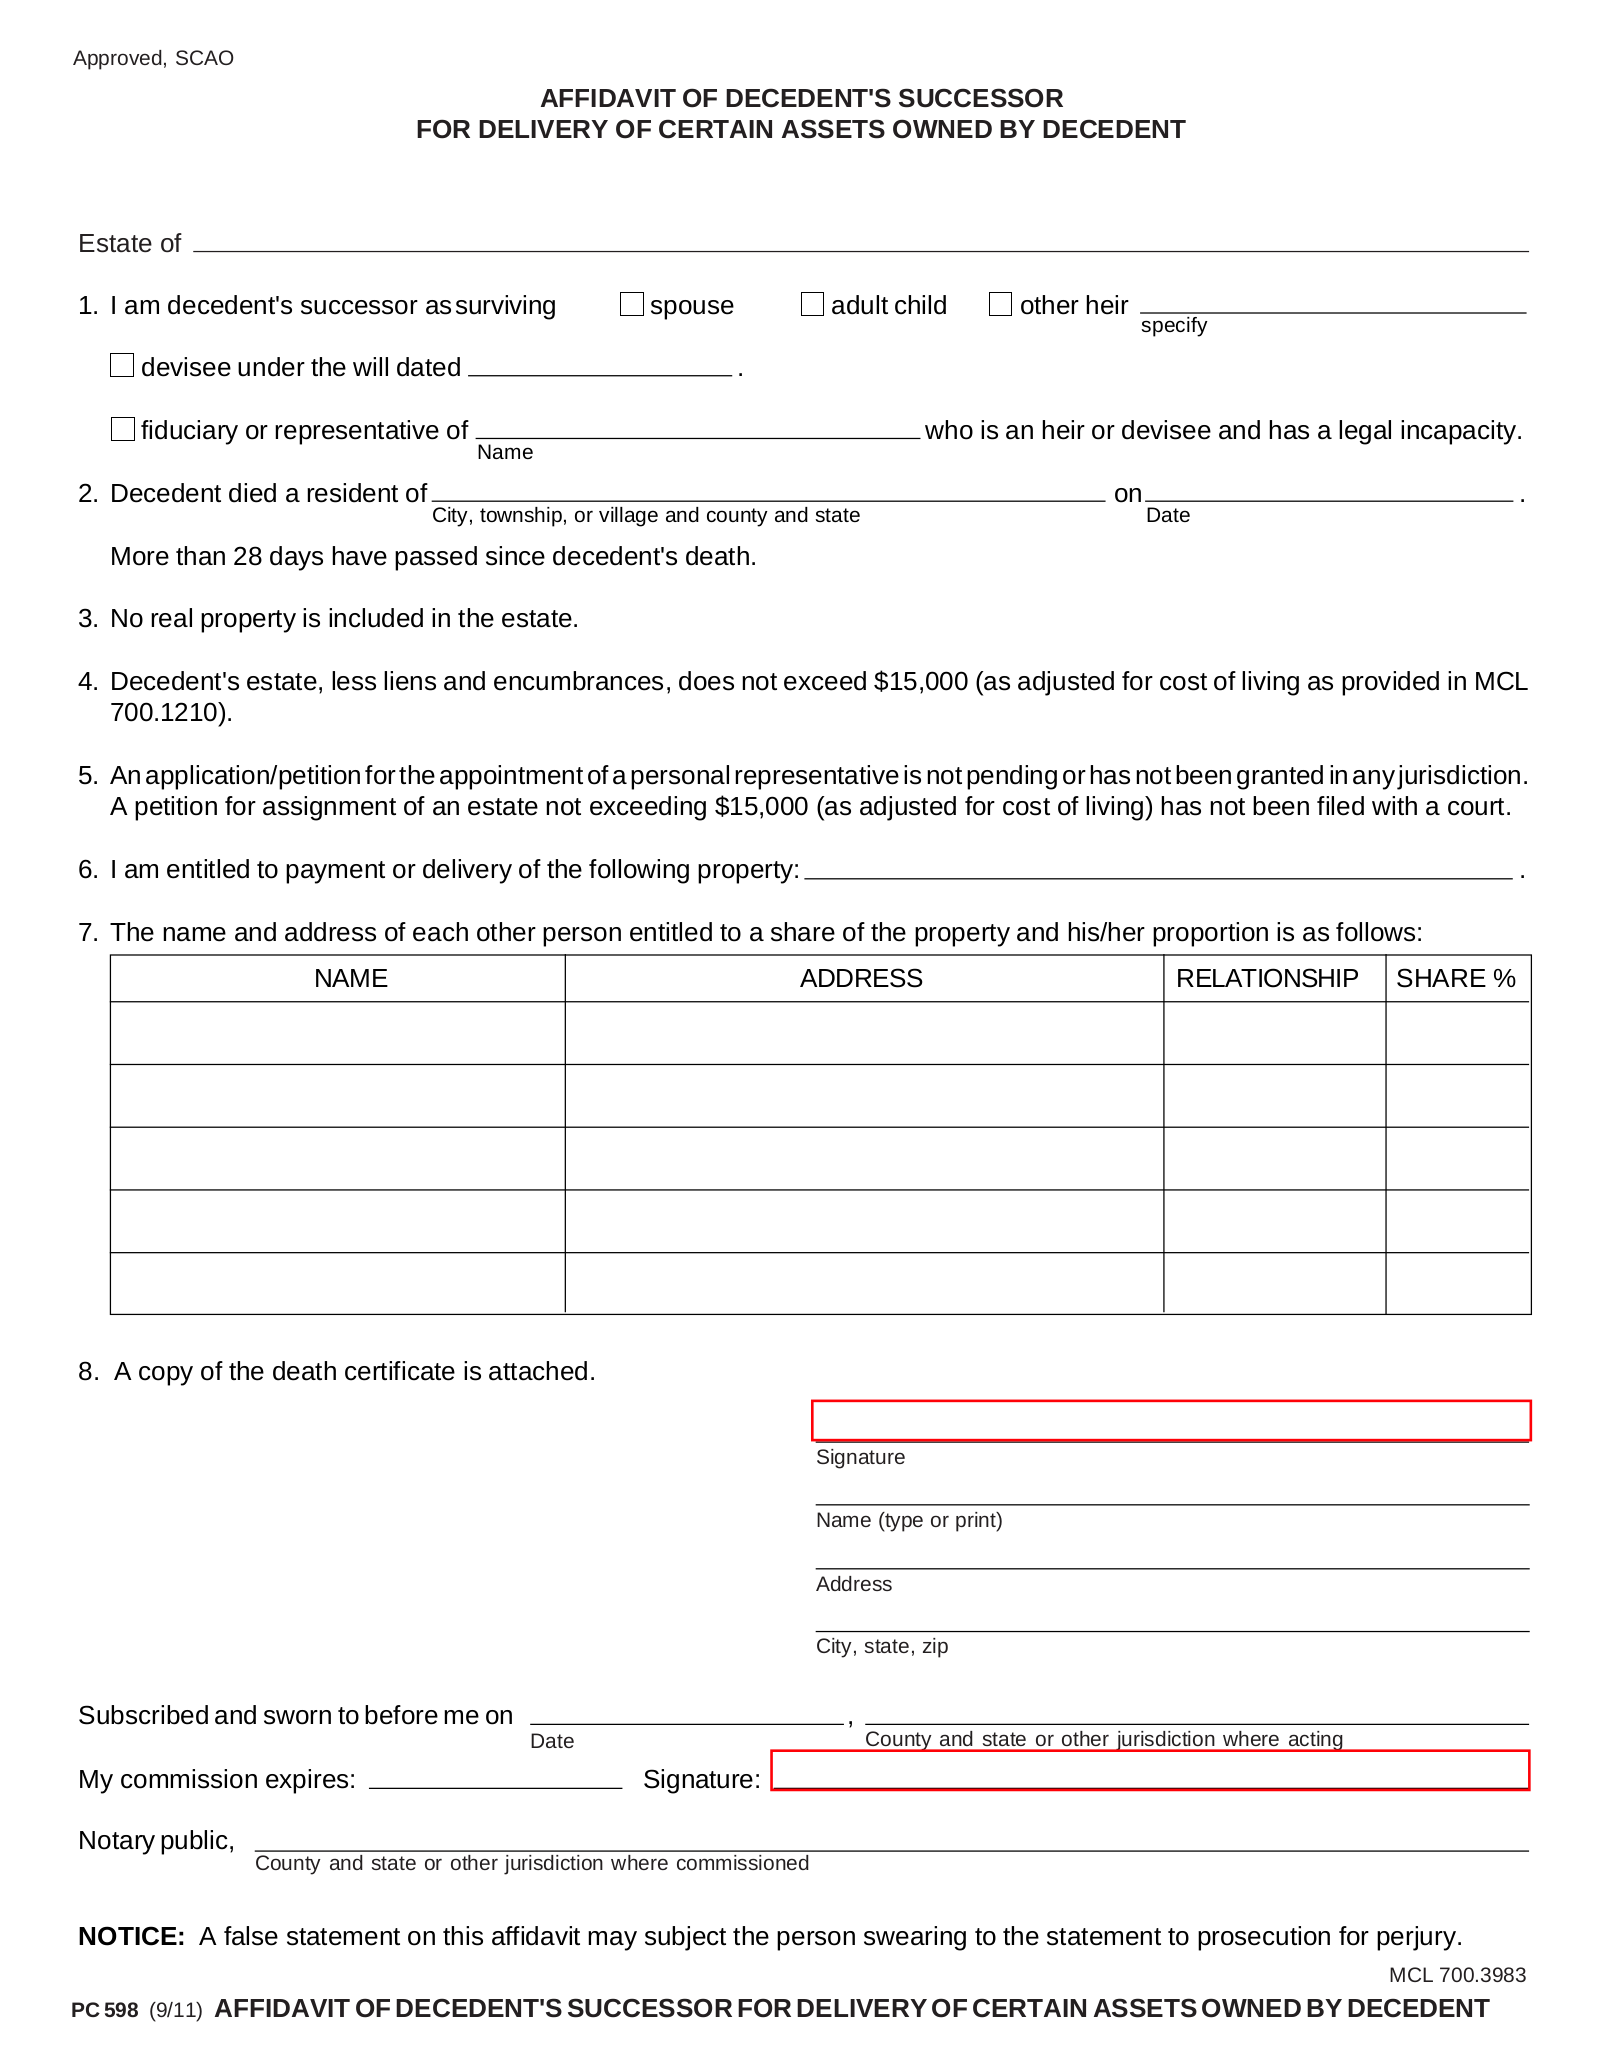 Michigan Small Estate Affidavit | Form PC 598